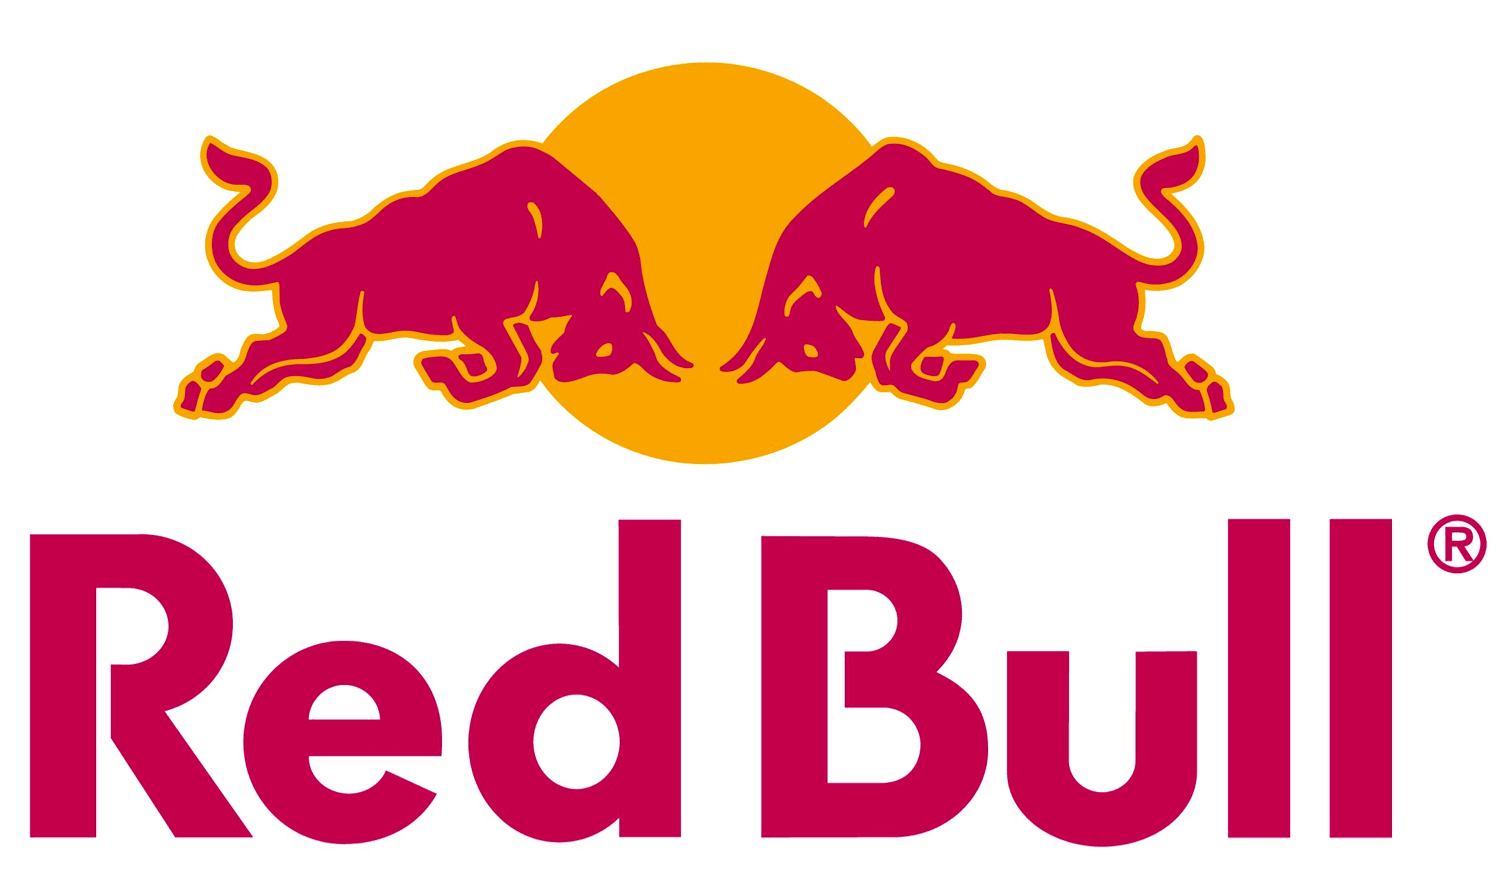 Famous Bull Logo - Red Bull News: A powerful logo